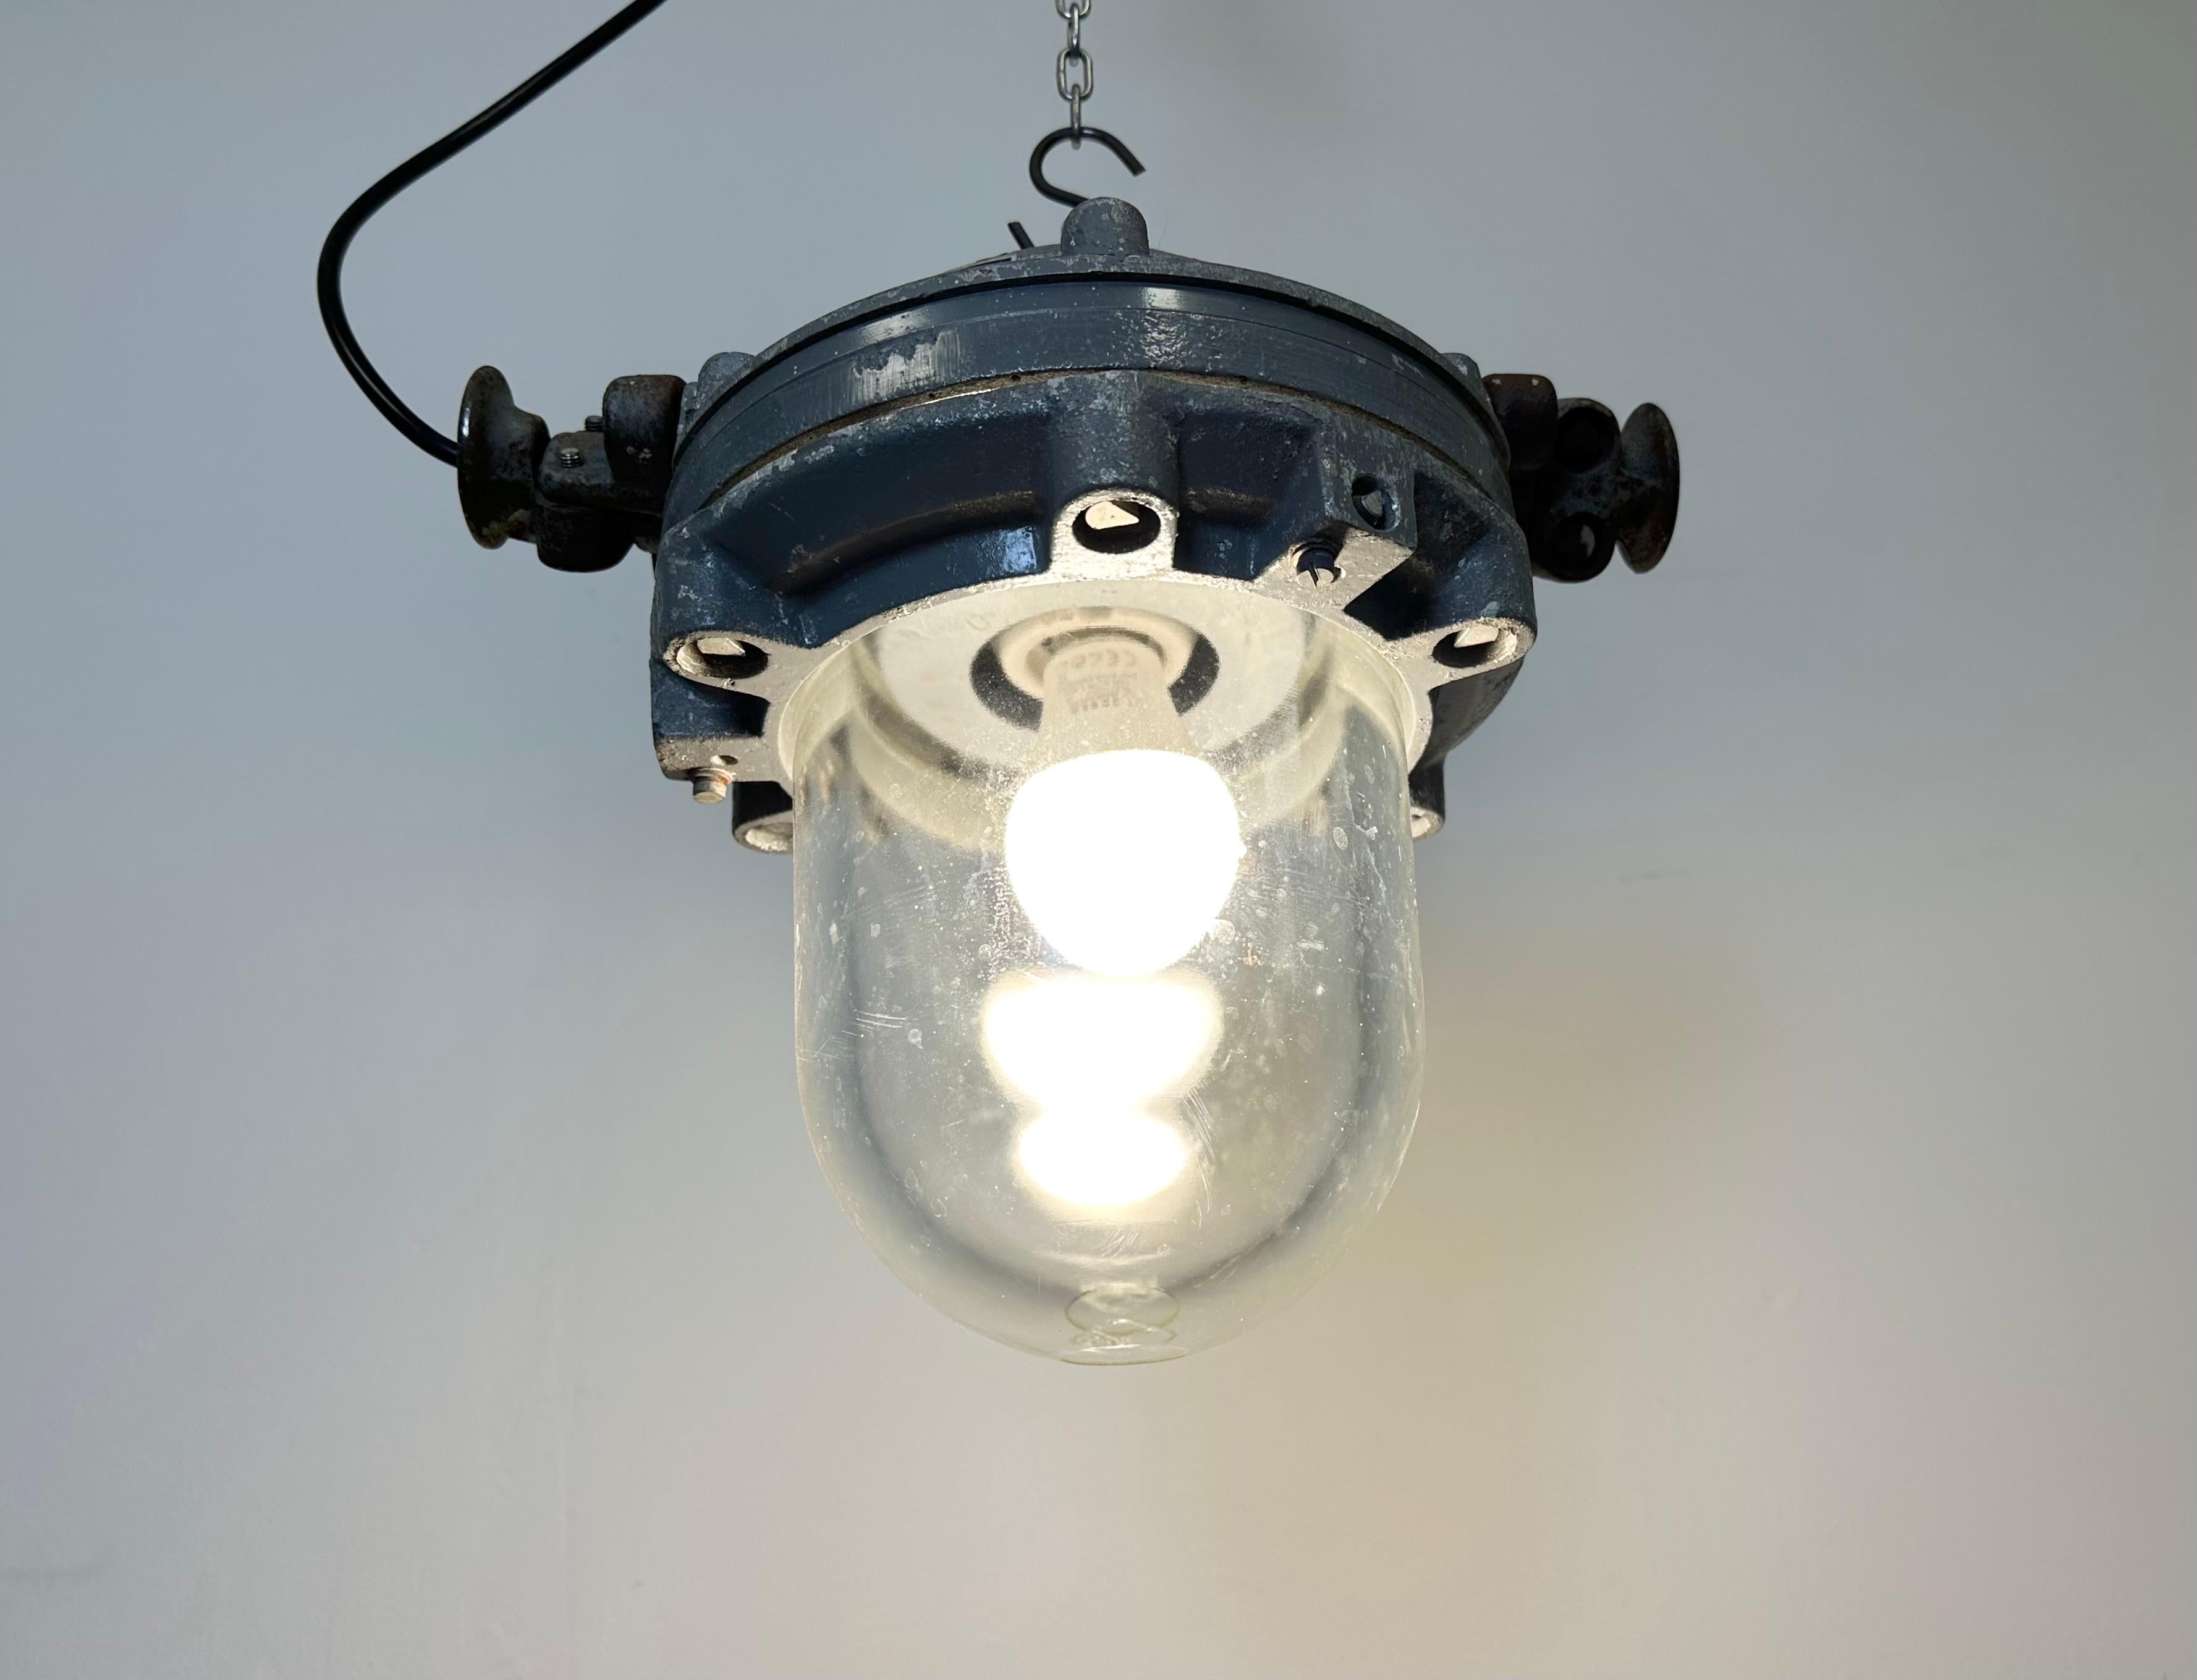 Dunkelgraue Explosion Proof-Lampe aus Aluminiumguss, 1970er Jahre im Angebot 11